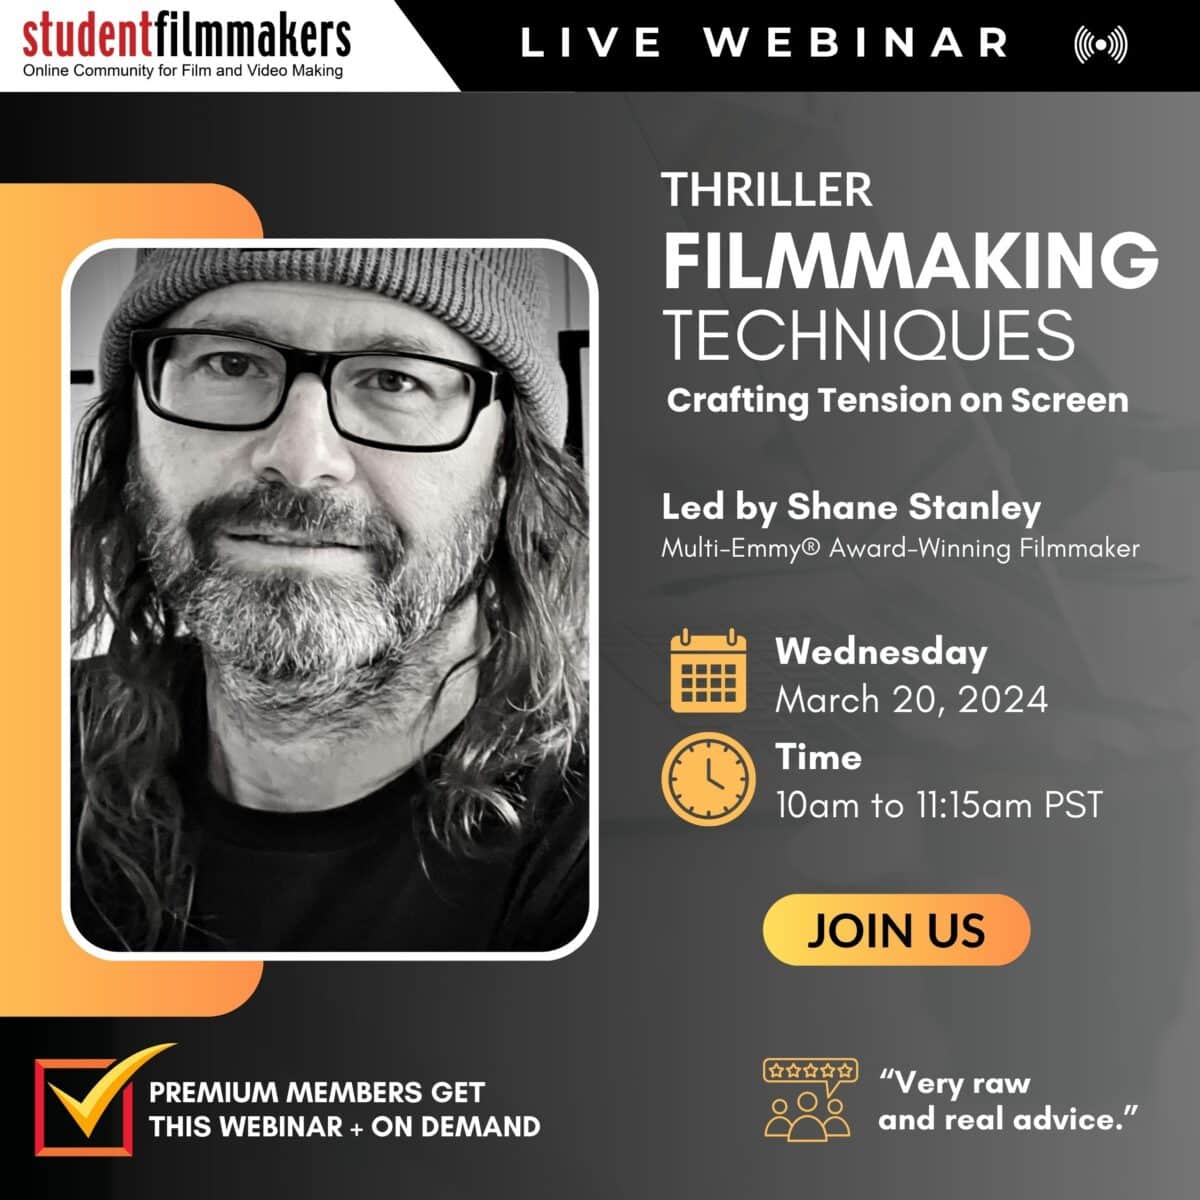 Live Webinar: "Thriller Filmmaking Techniques: Crafting Tension on Screen" with Shane Stanley, Multi-Emmy® Award-Winning Filmmaker